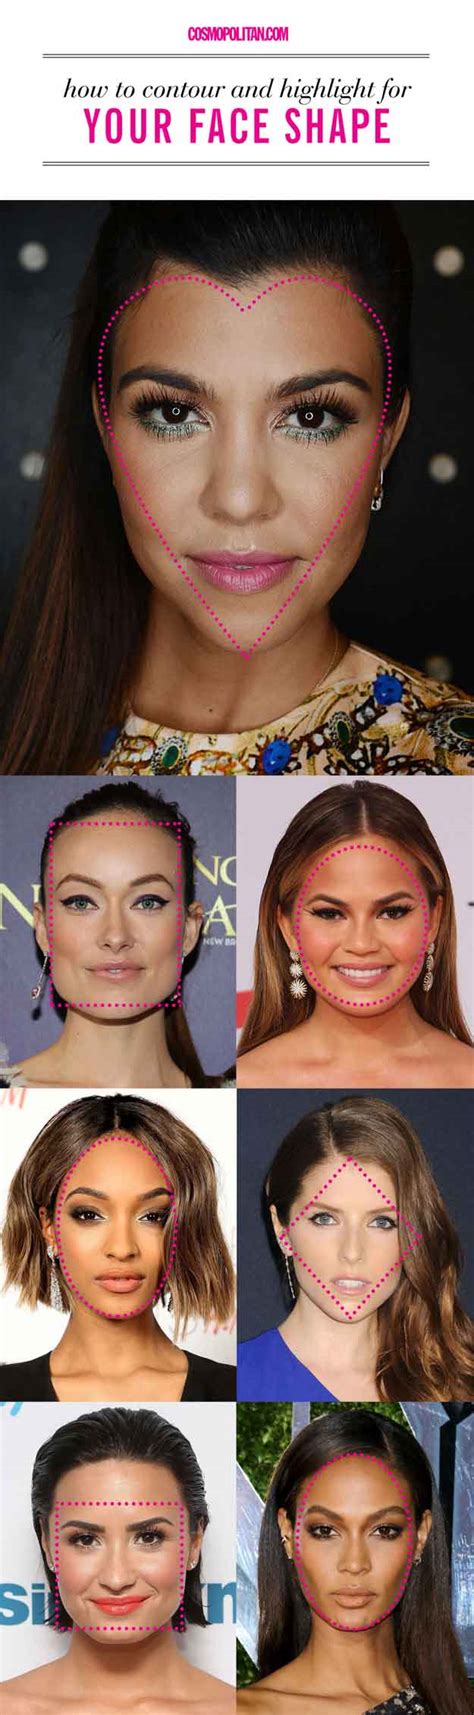 So, how to contour oblong face? Contouring Techniques By Facial Shape